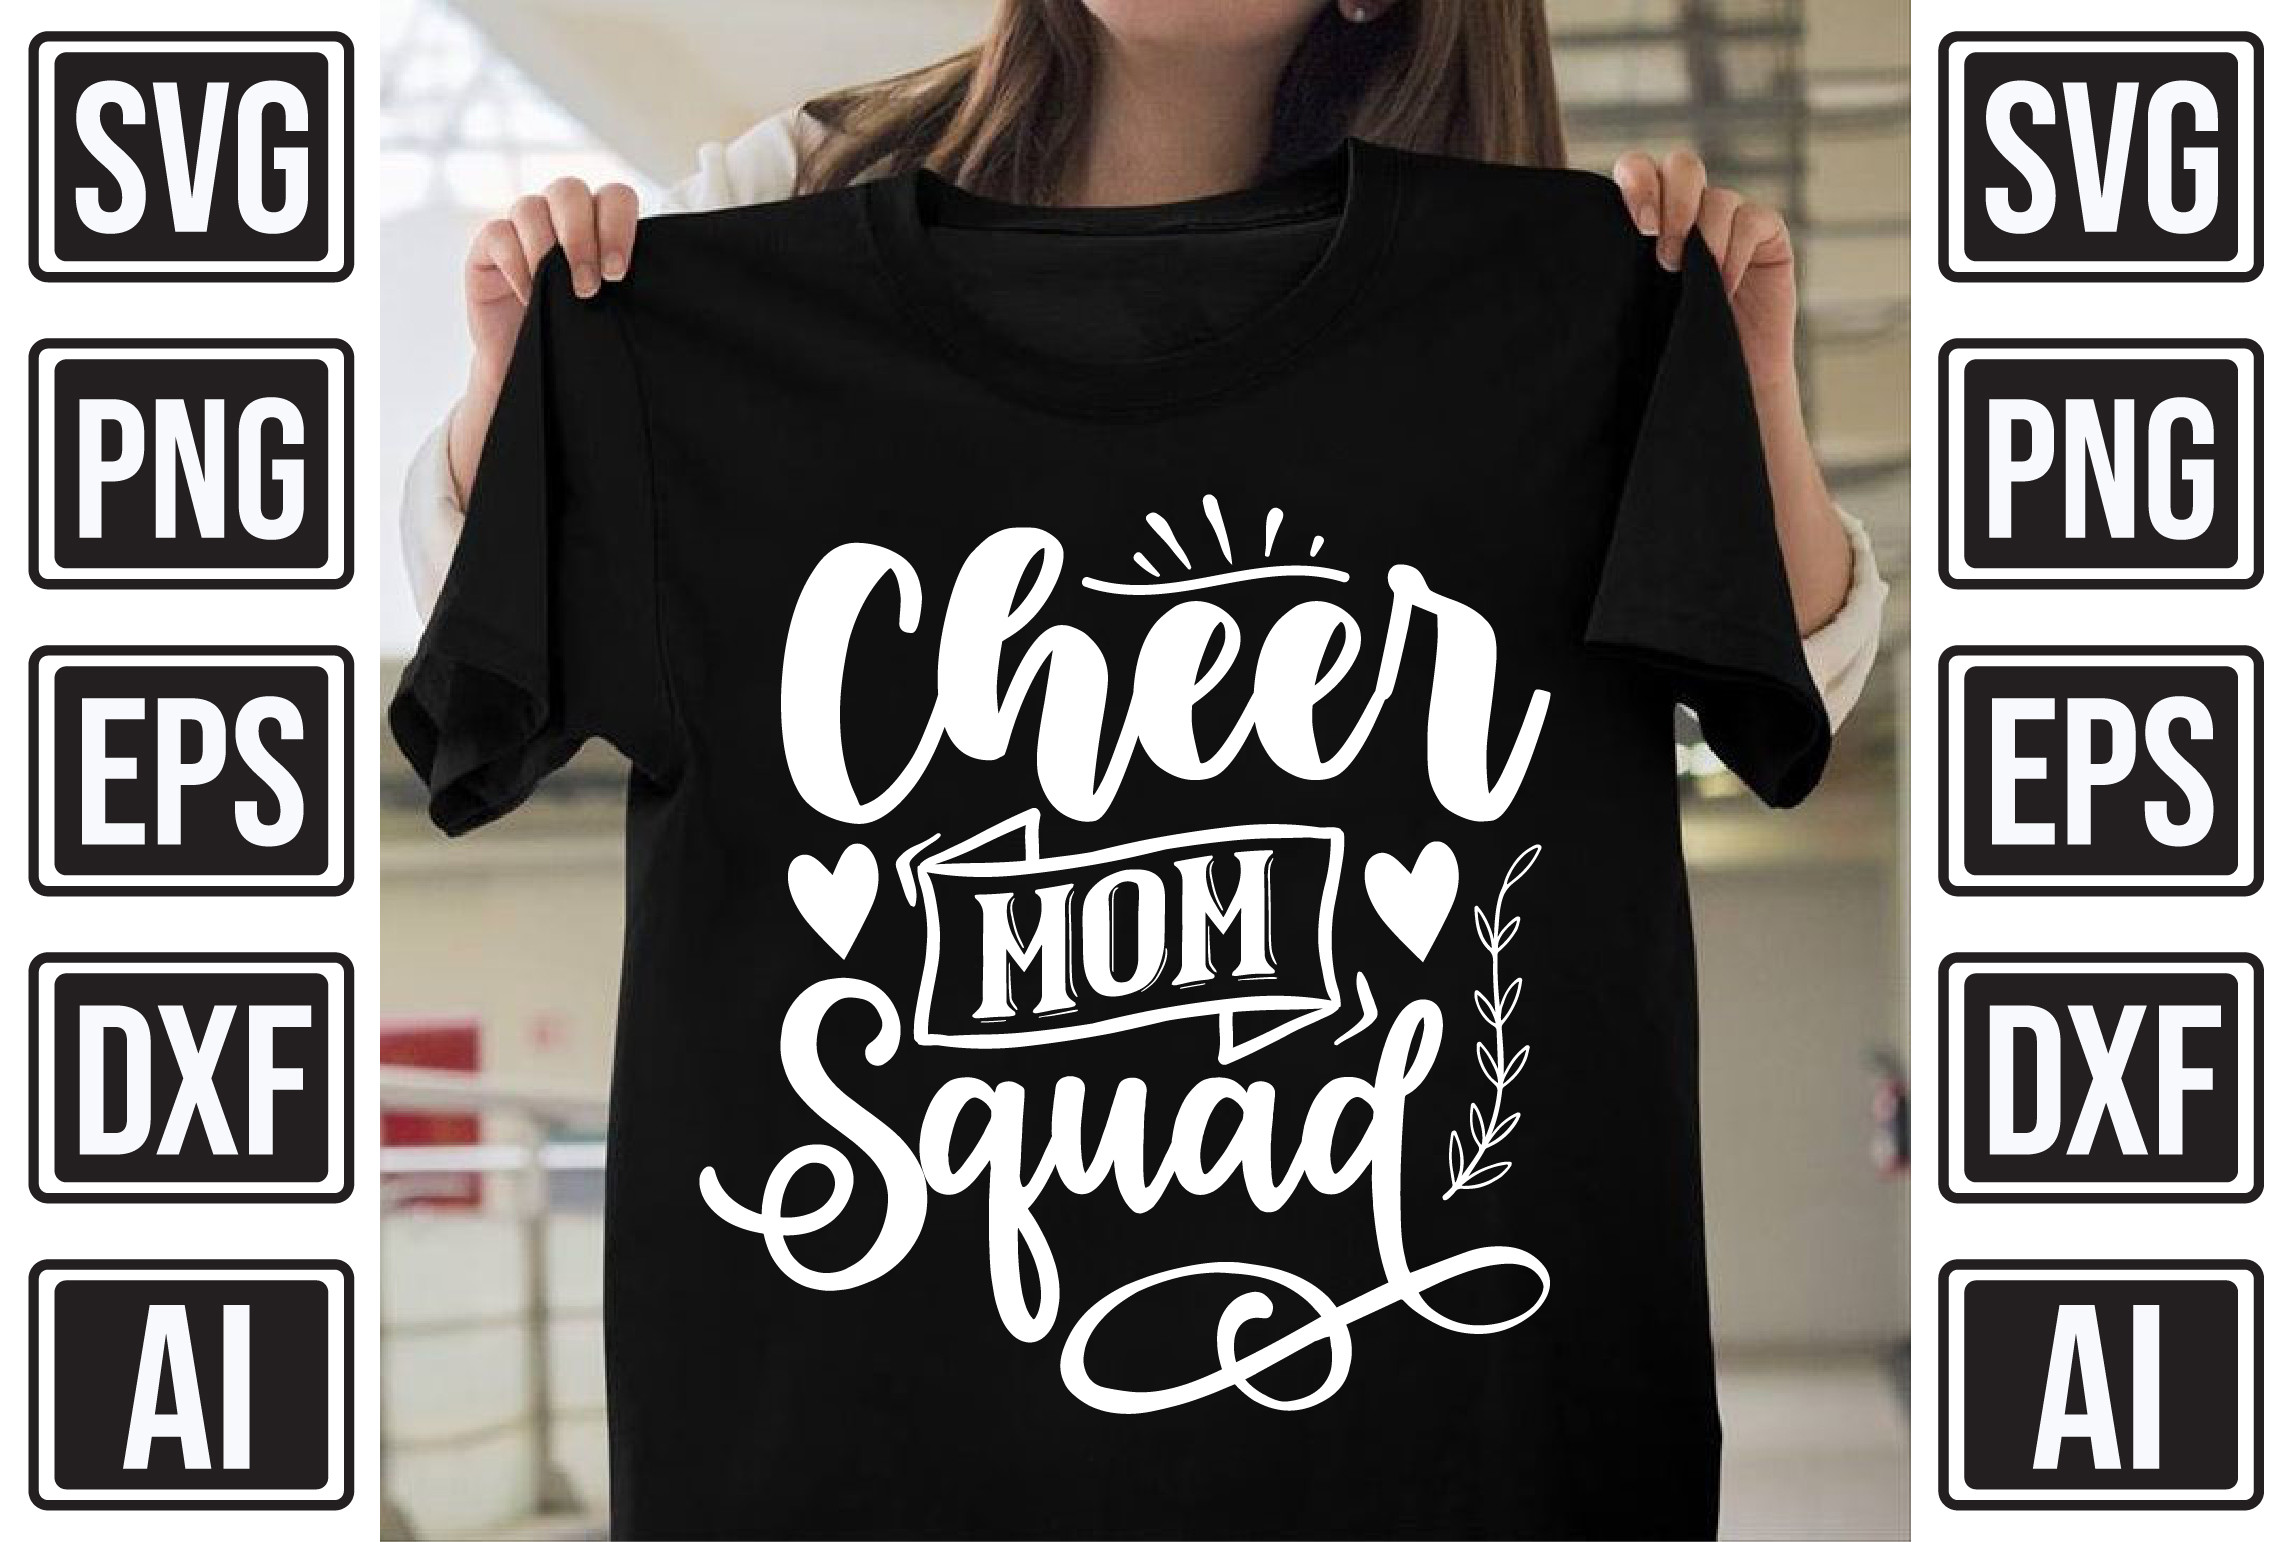 Cheer Mom Squad Graphic by T-SHIRTBUNDLE · Creative Fabrica